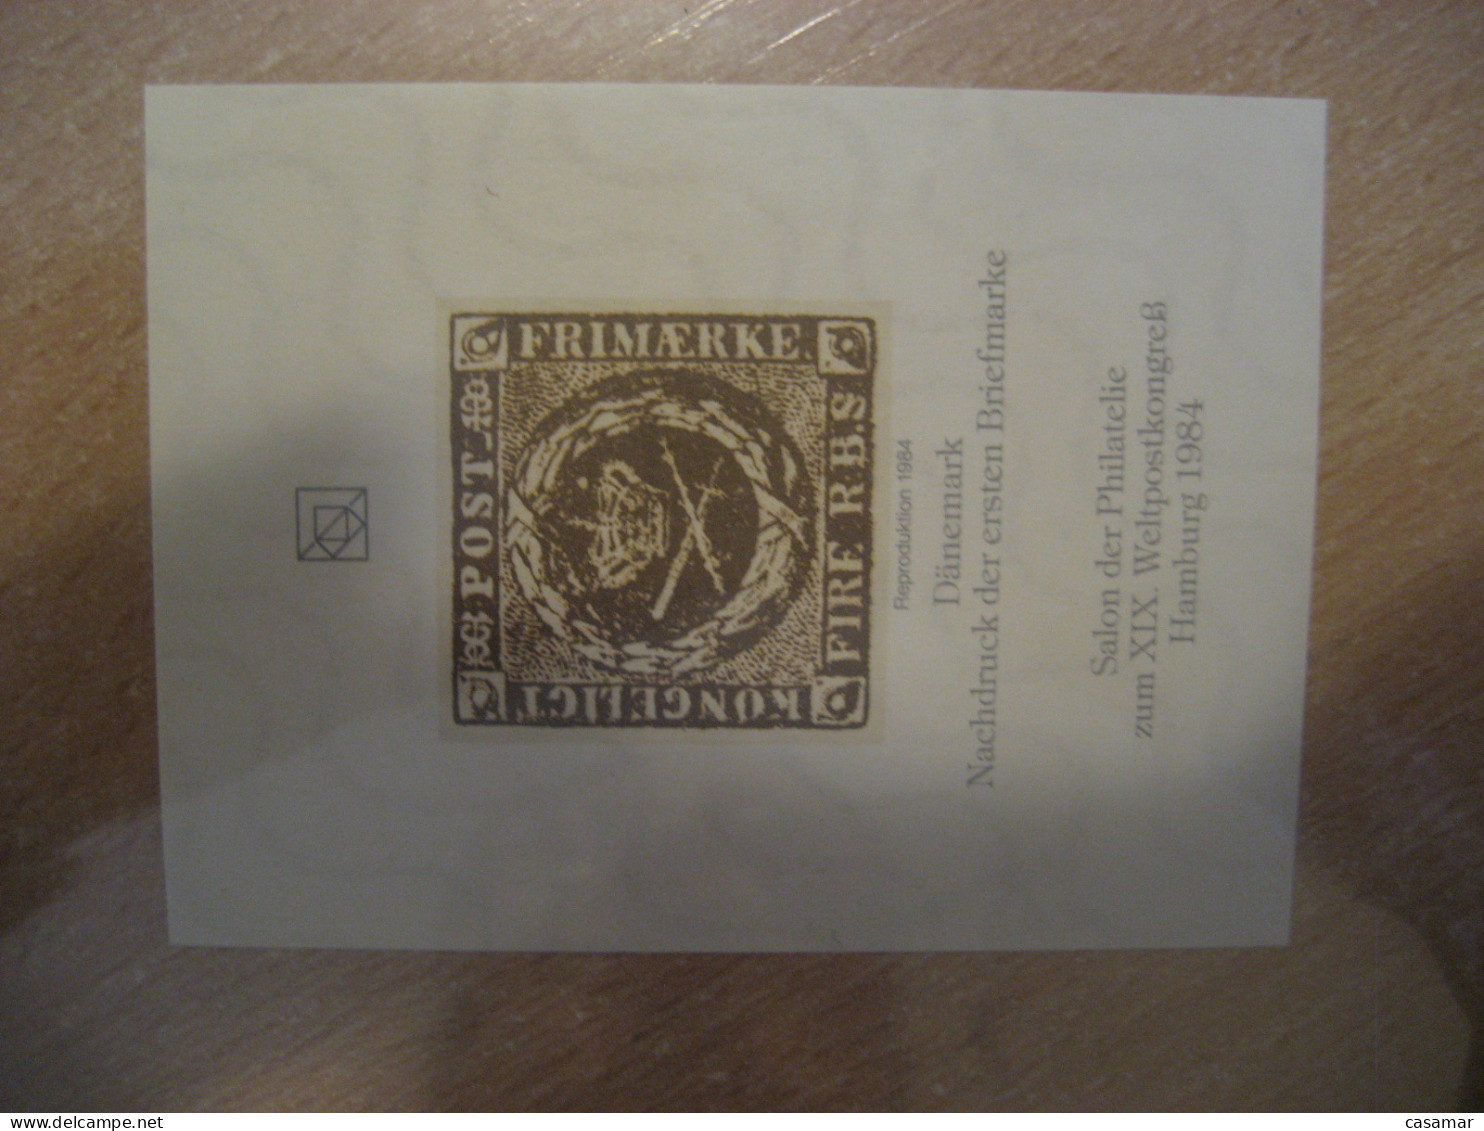 HAMBURG 1984 DENMARK Imperforated Reproduktion Proof Epreuve Nachdruck Poster Stamp Vignette GERMANY Label - Proofs & Reprints